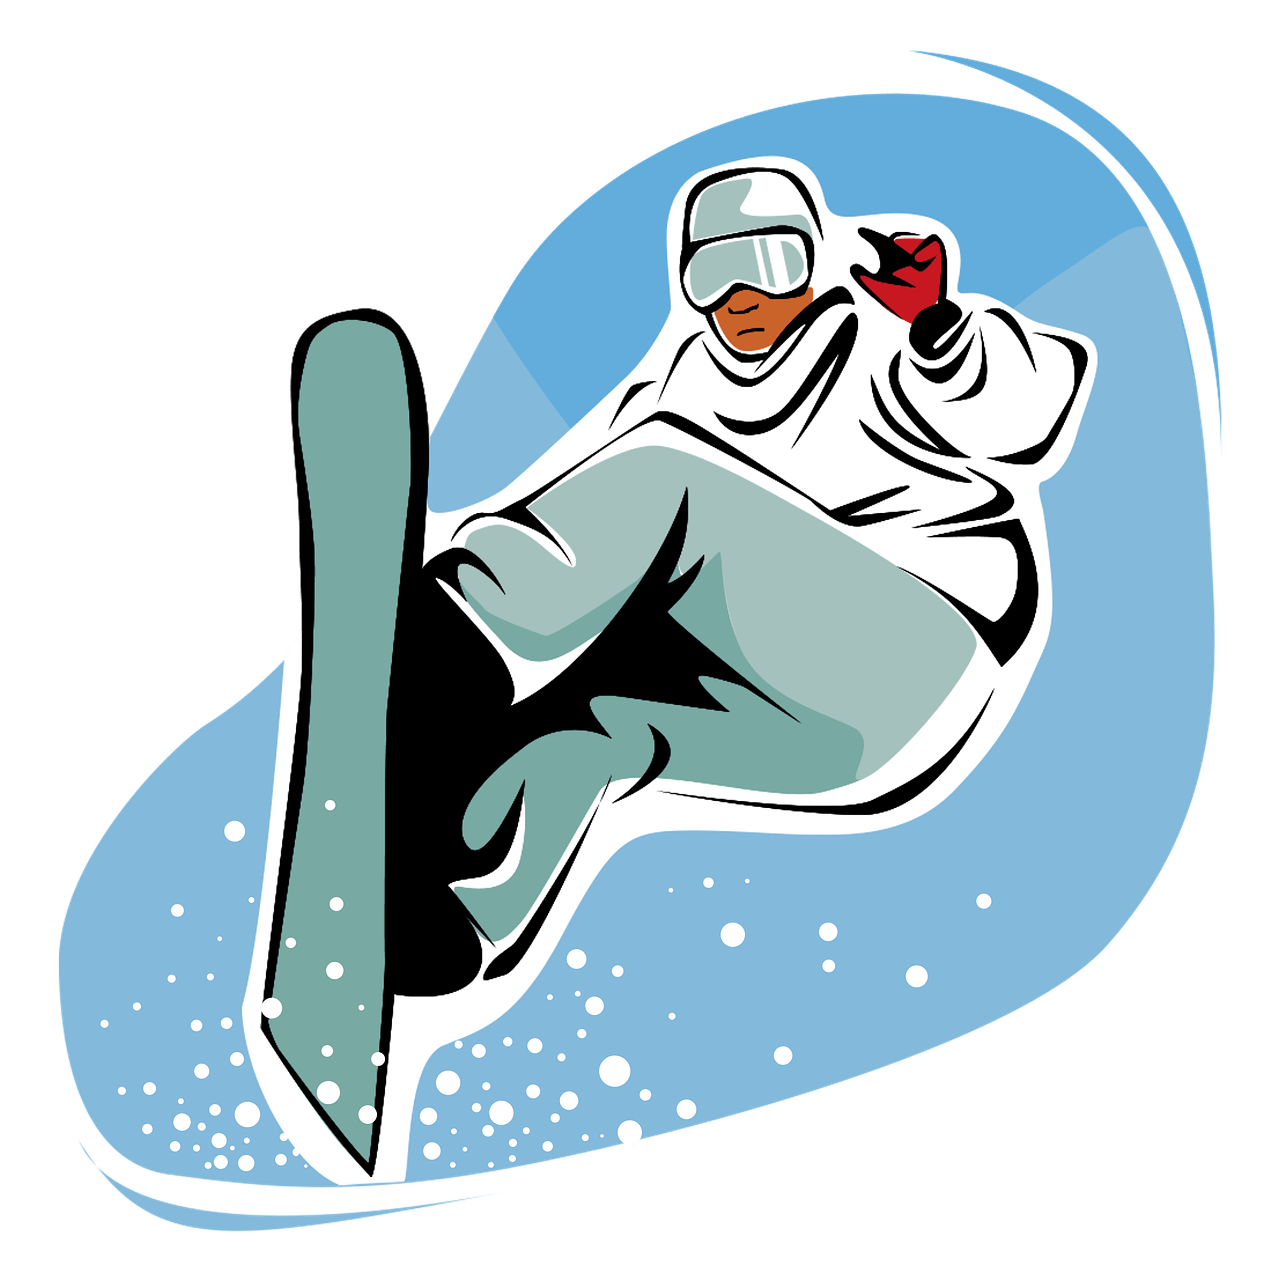 Sports Snowboarding Clipart transparent PNG.